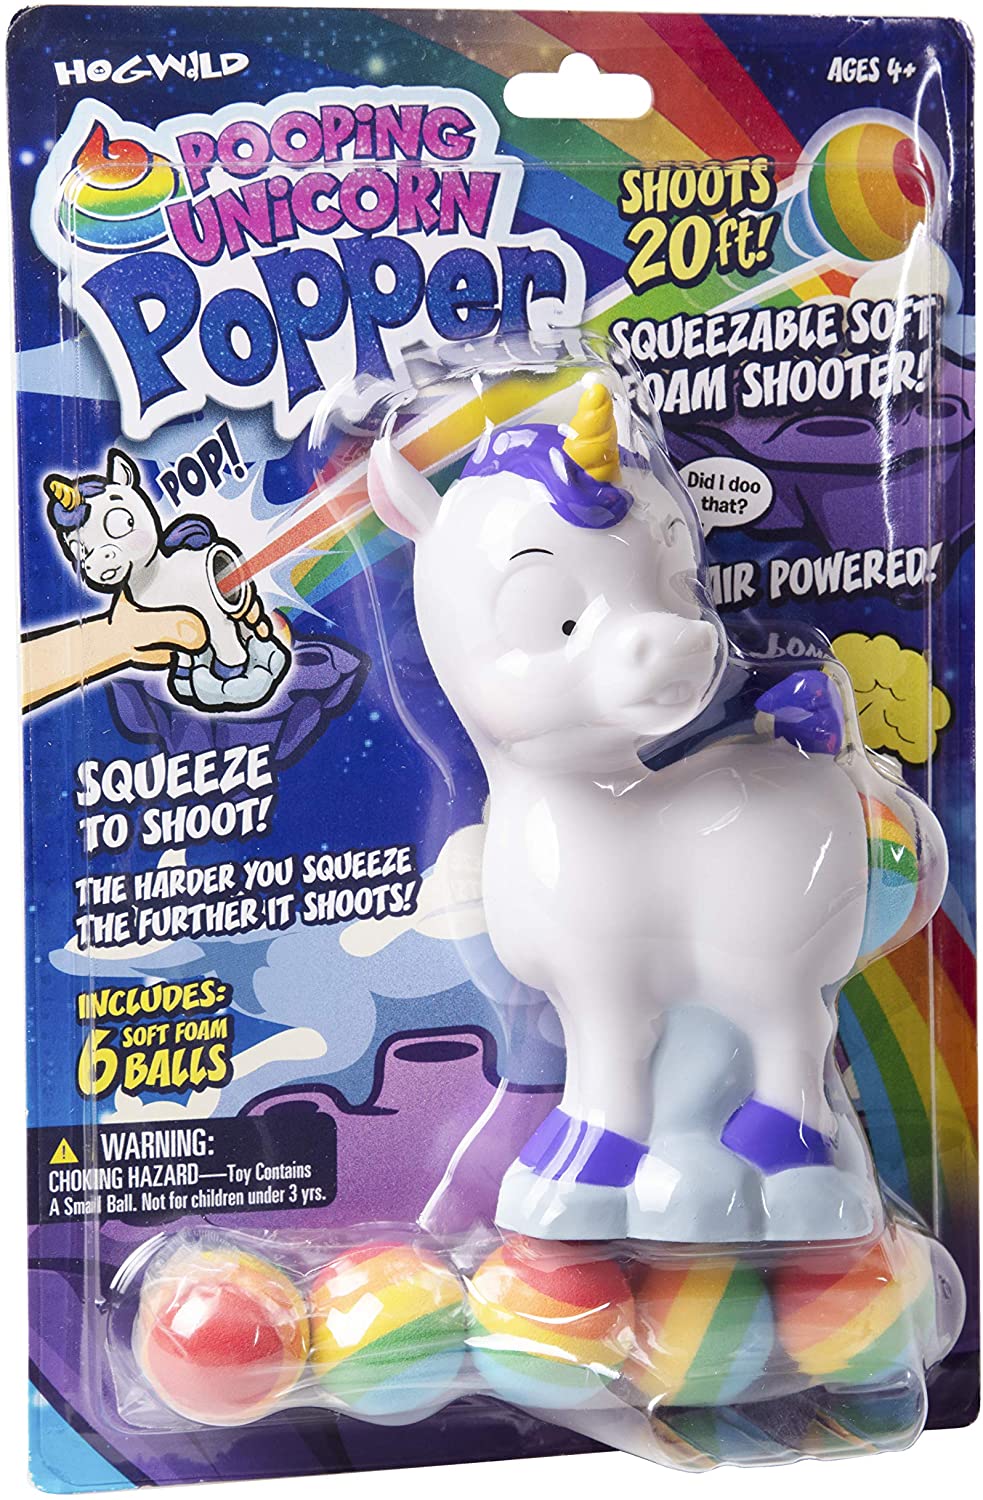 Hog Wild Pooping Unicorn Popper Toy